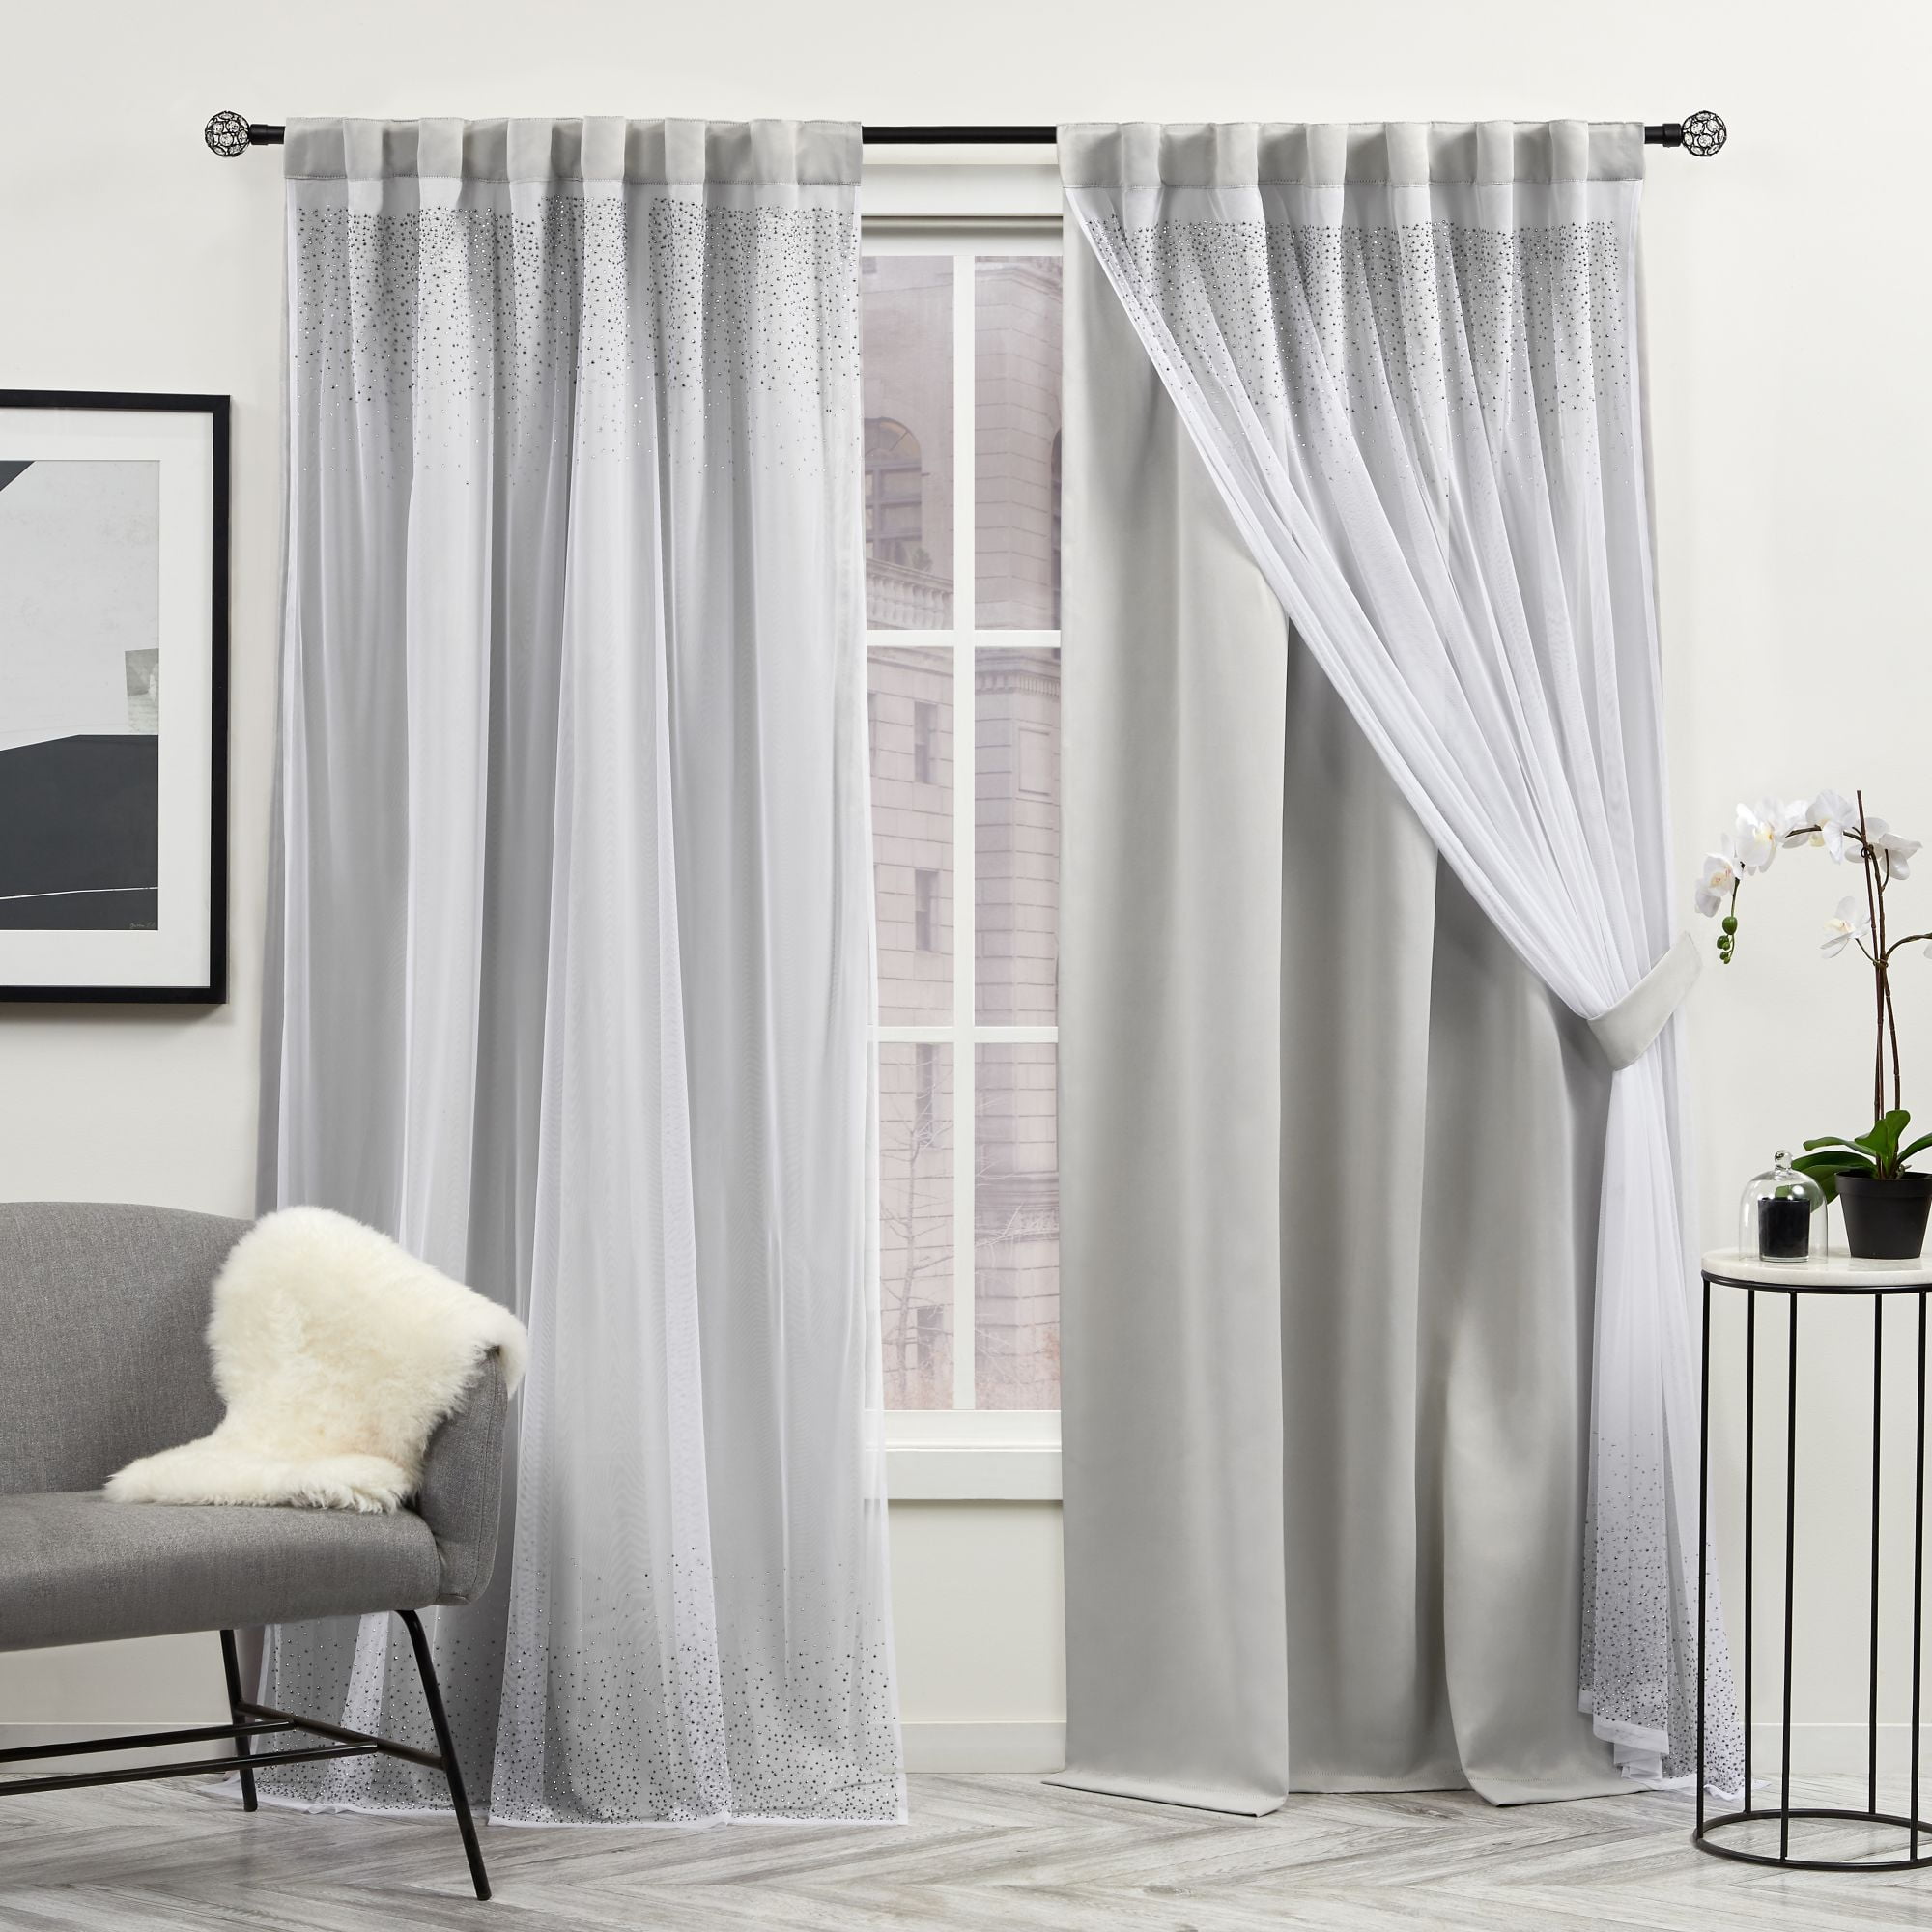 52x84 Grey Exclusive Home Curtains Luminous Room Darkening Blackout Hidden Tab Top Curtain Panels 